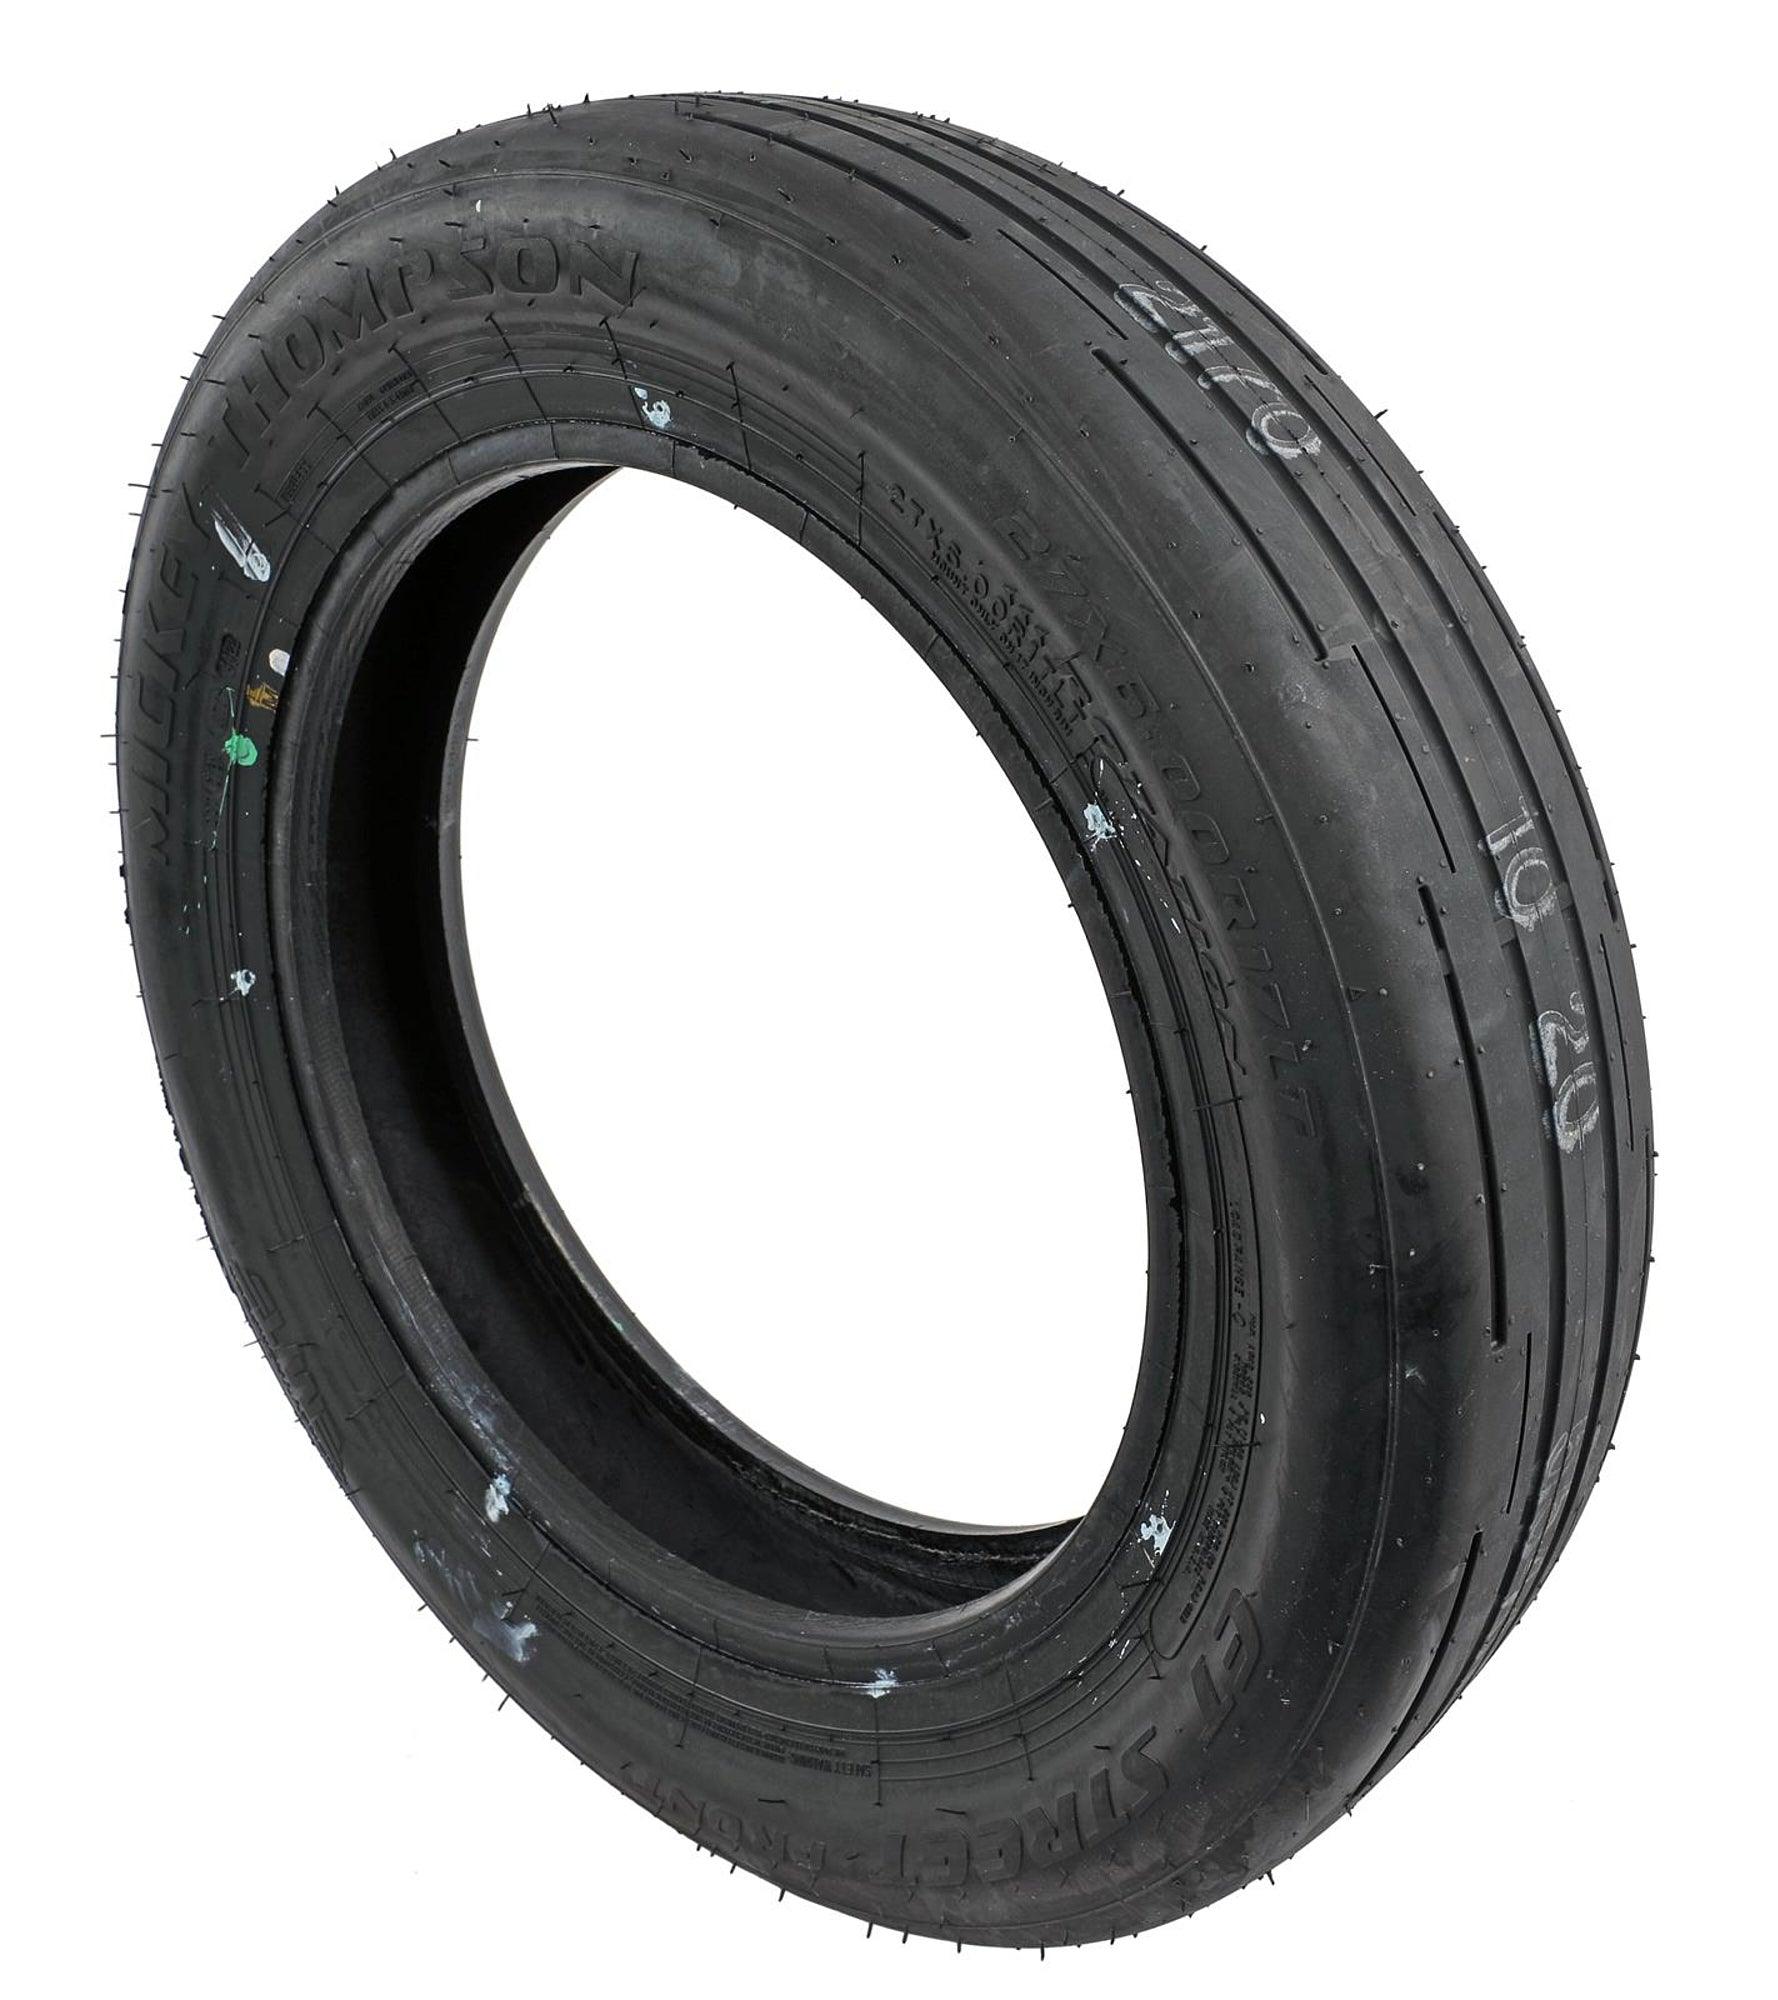 ET Sreet Radial Front Tire 27x6.00R17LT - Burlile Performance Products